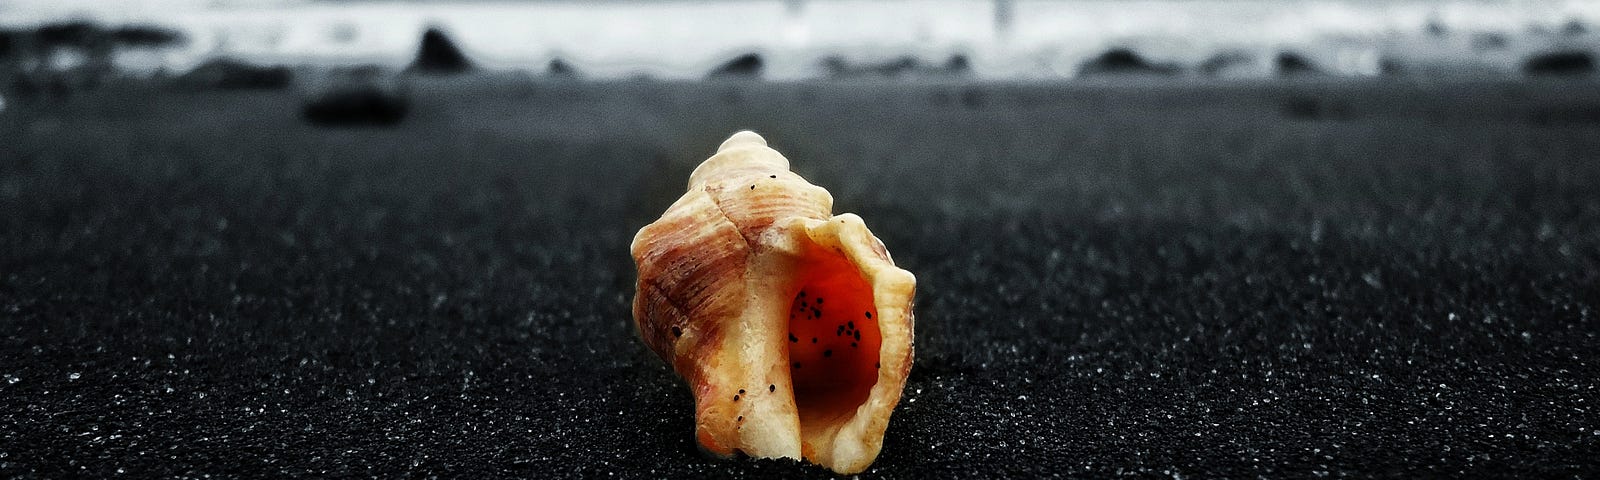 Orange conch shell on a dark sandy beach.